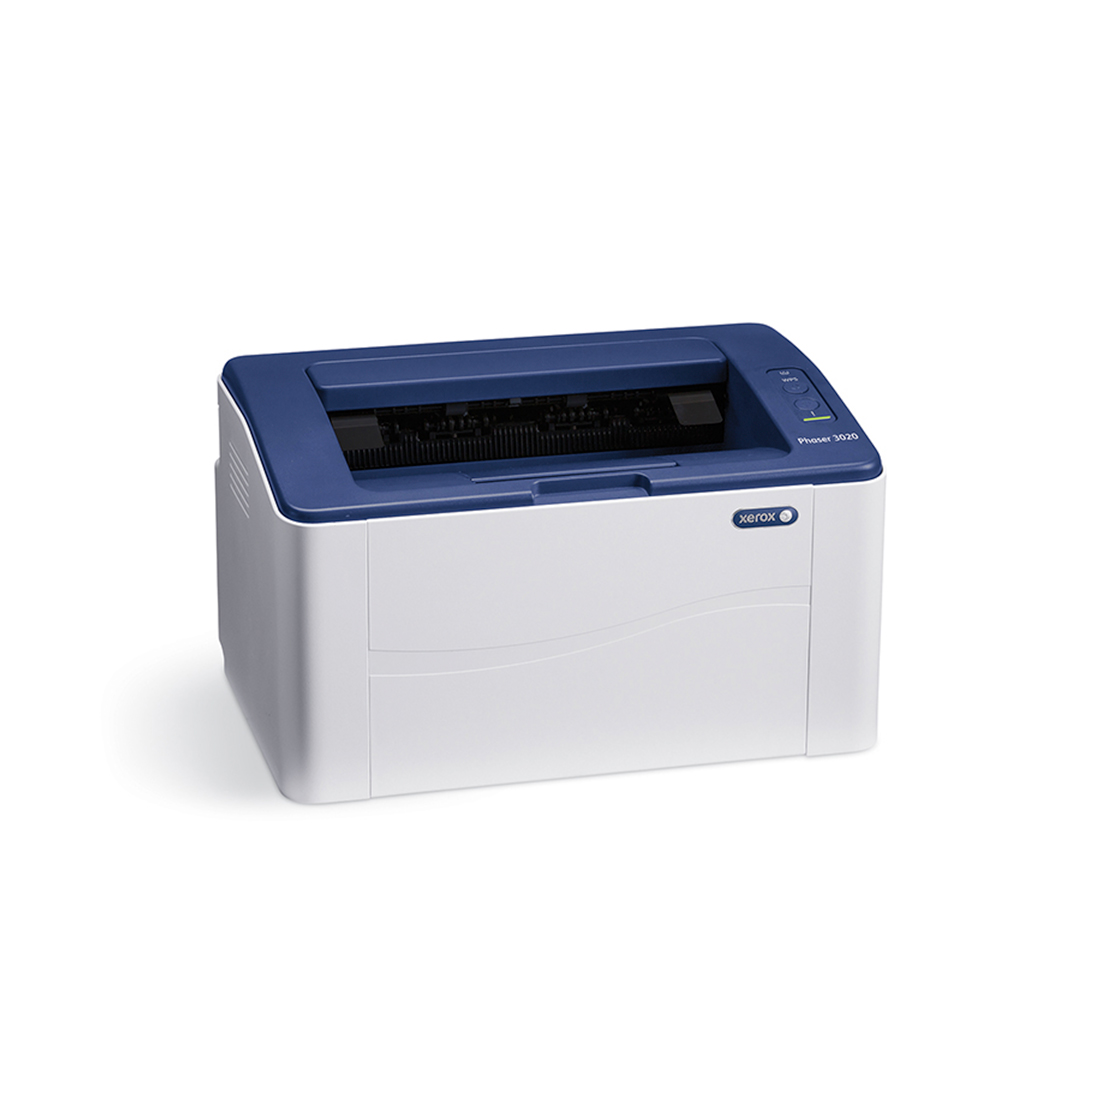 Монохромный принтер, Xerox, Phaser 3020BI, A4, Лазерный, 20 стр/мин, USB 2.0, Wi-Fi